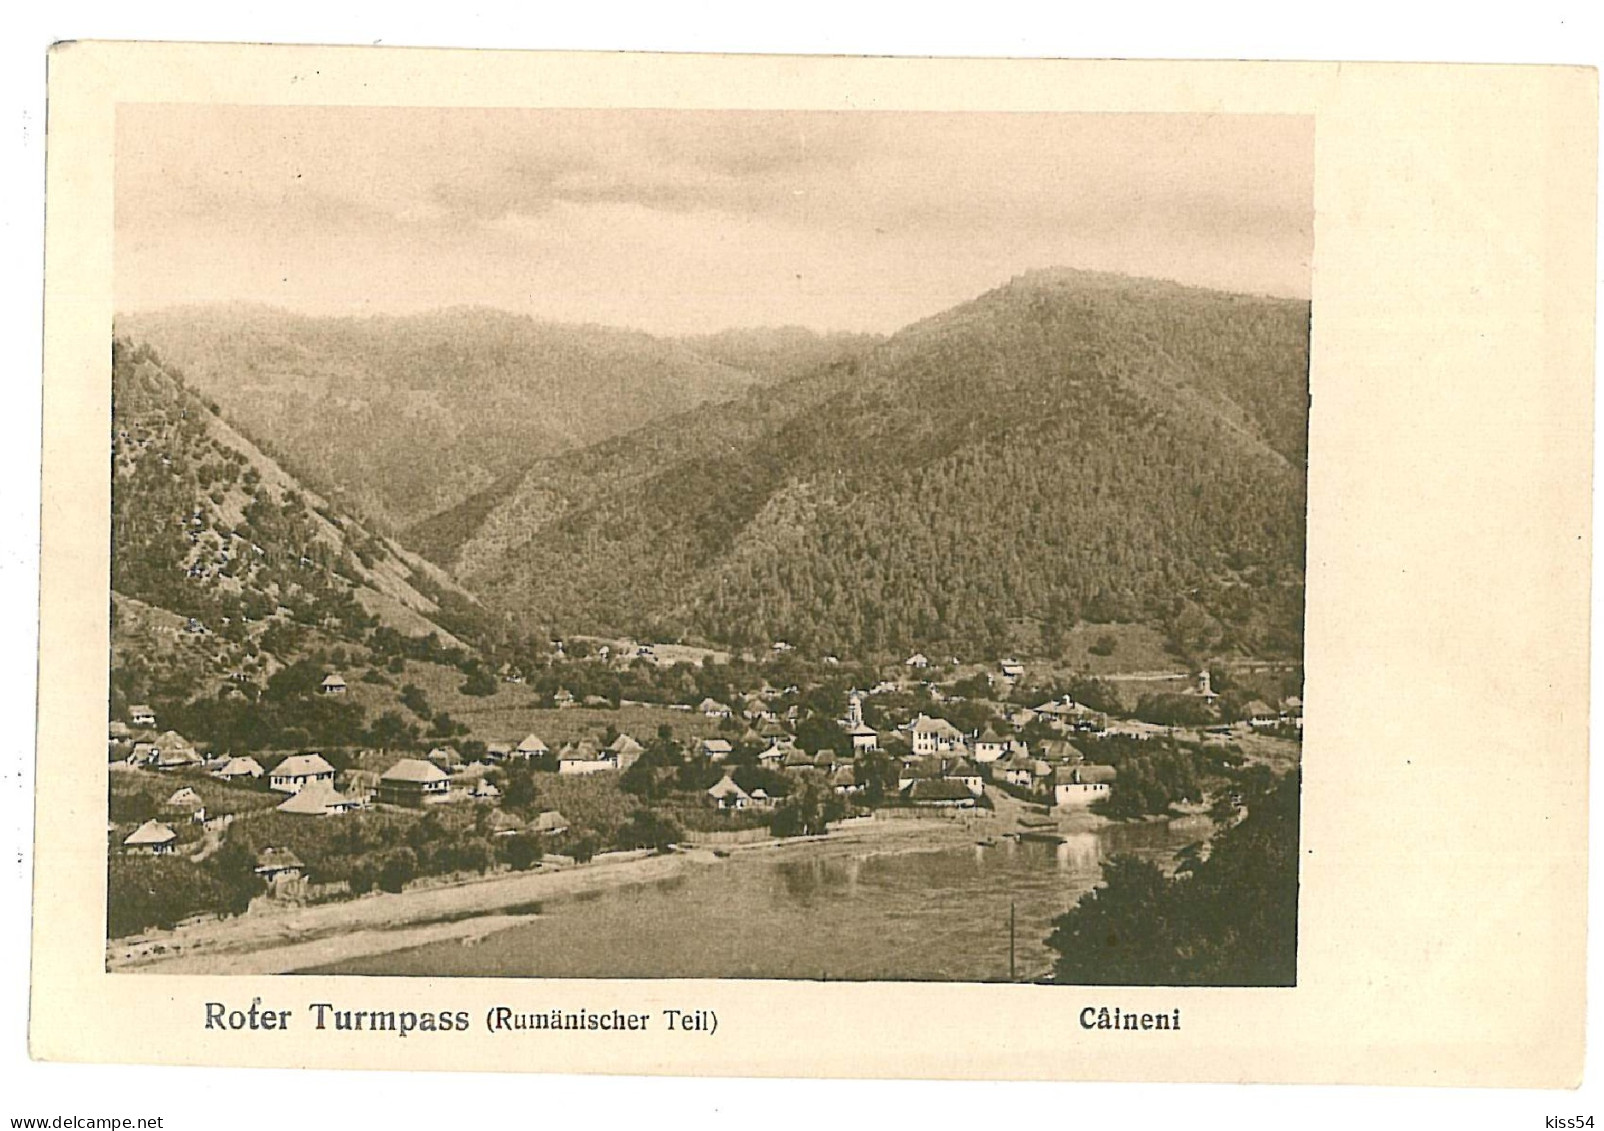 RO 84 - 775 CAINENI, Valcea, Panorama, Romania - Old Postcard - Unused - Rumänien